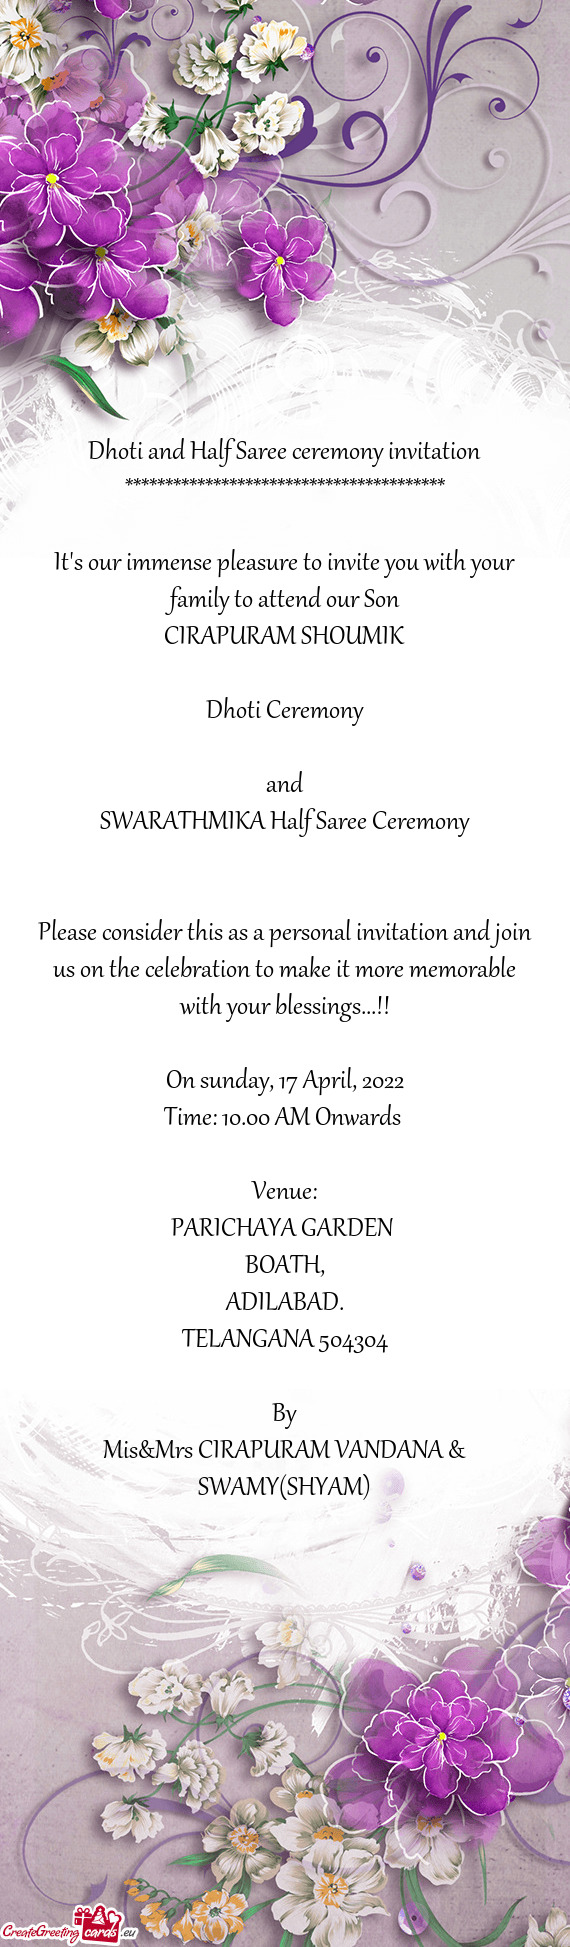 SWARATHMIKA Half Saree Ceremony